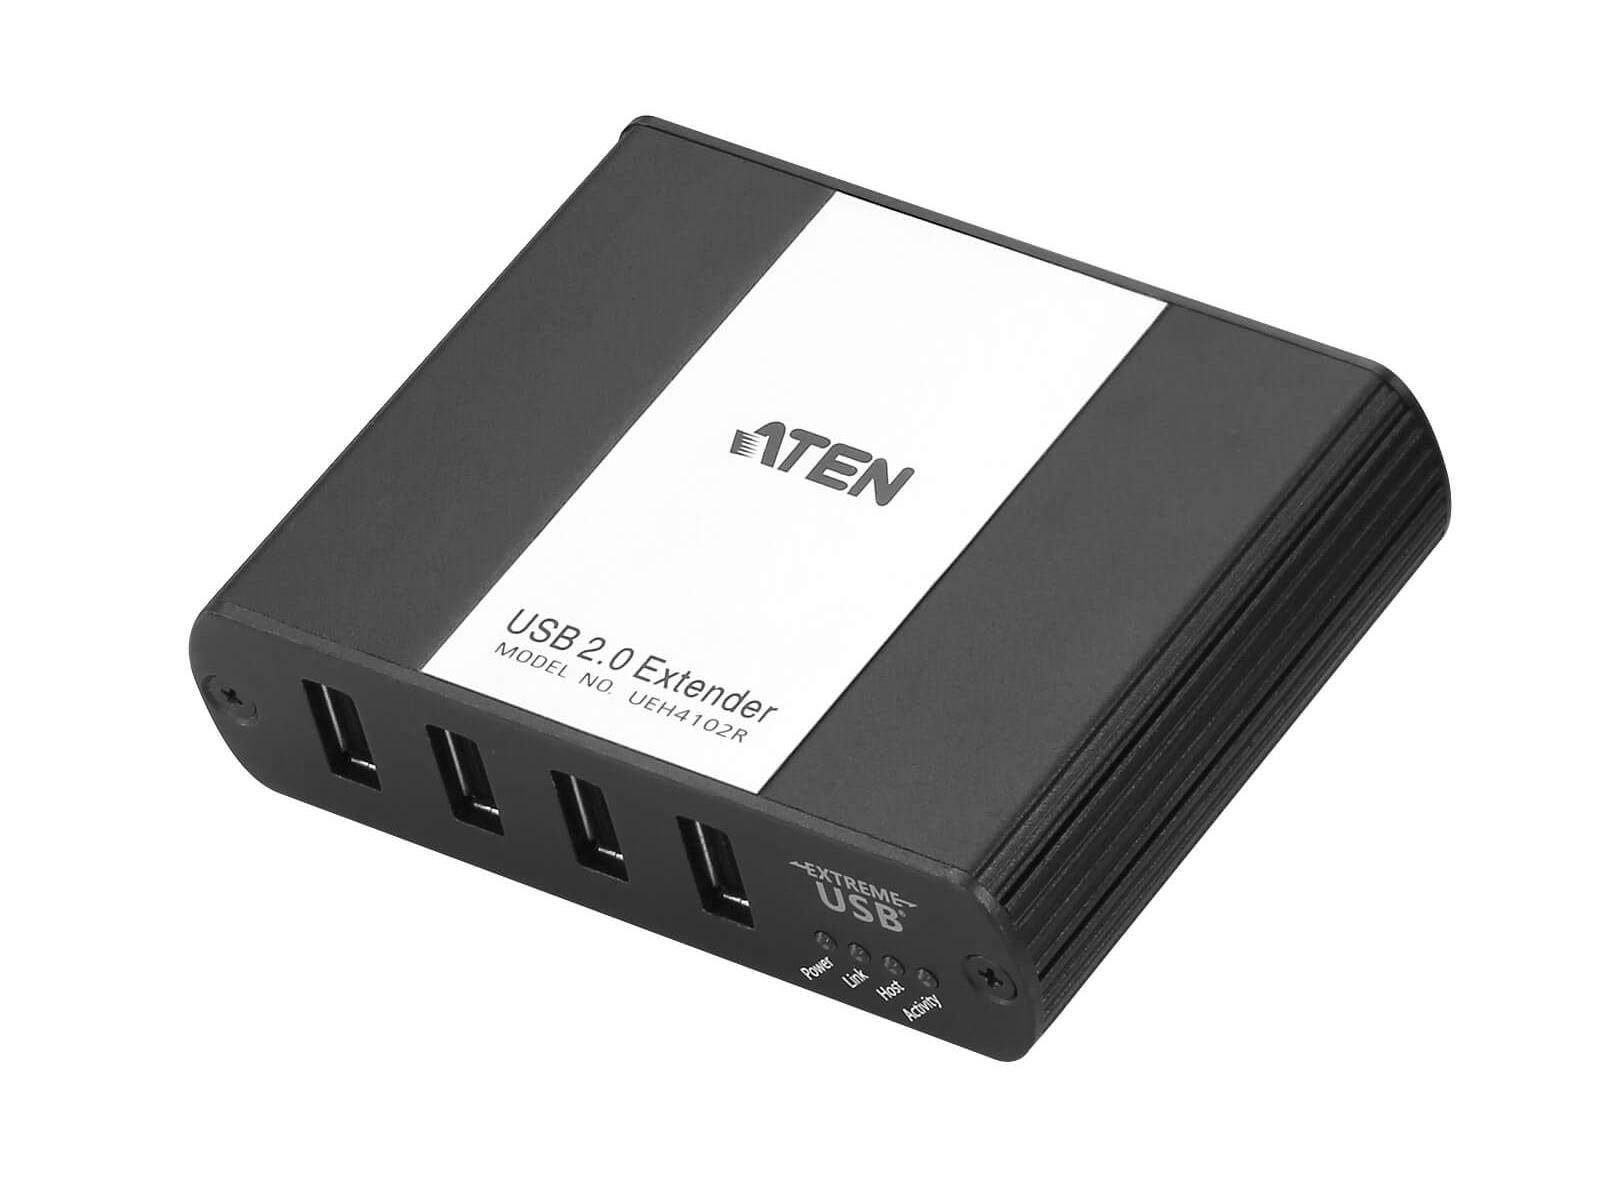 UEH4102 4-Port USB 2.0 Cat 5 Extender (Transmitter/Receiver) Kit over LAN by Aten